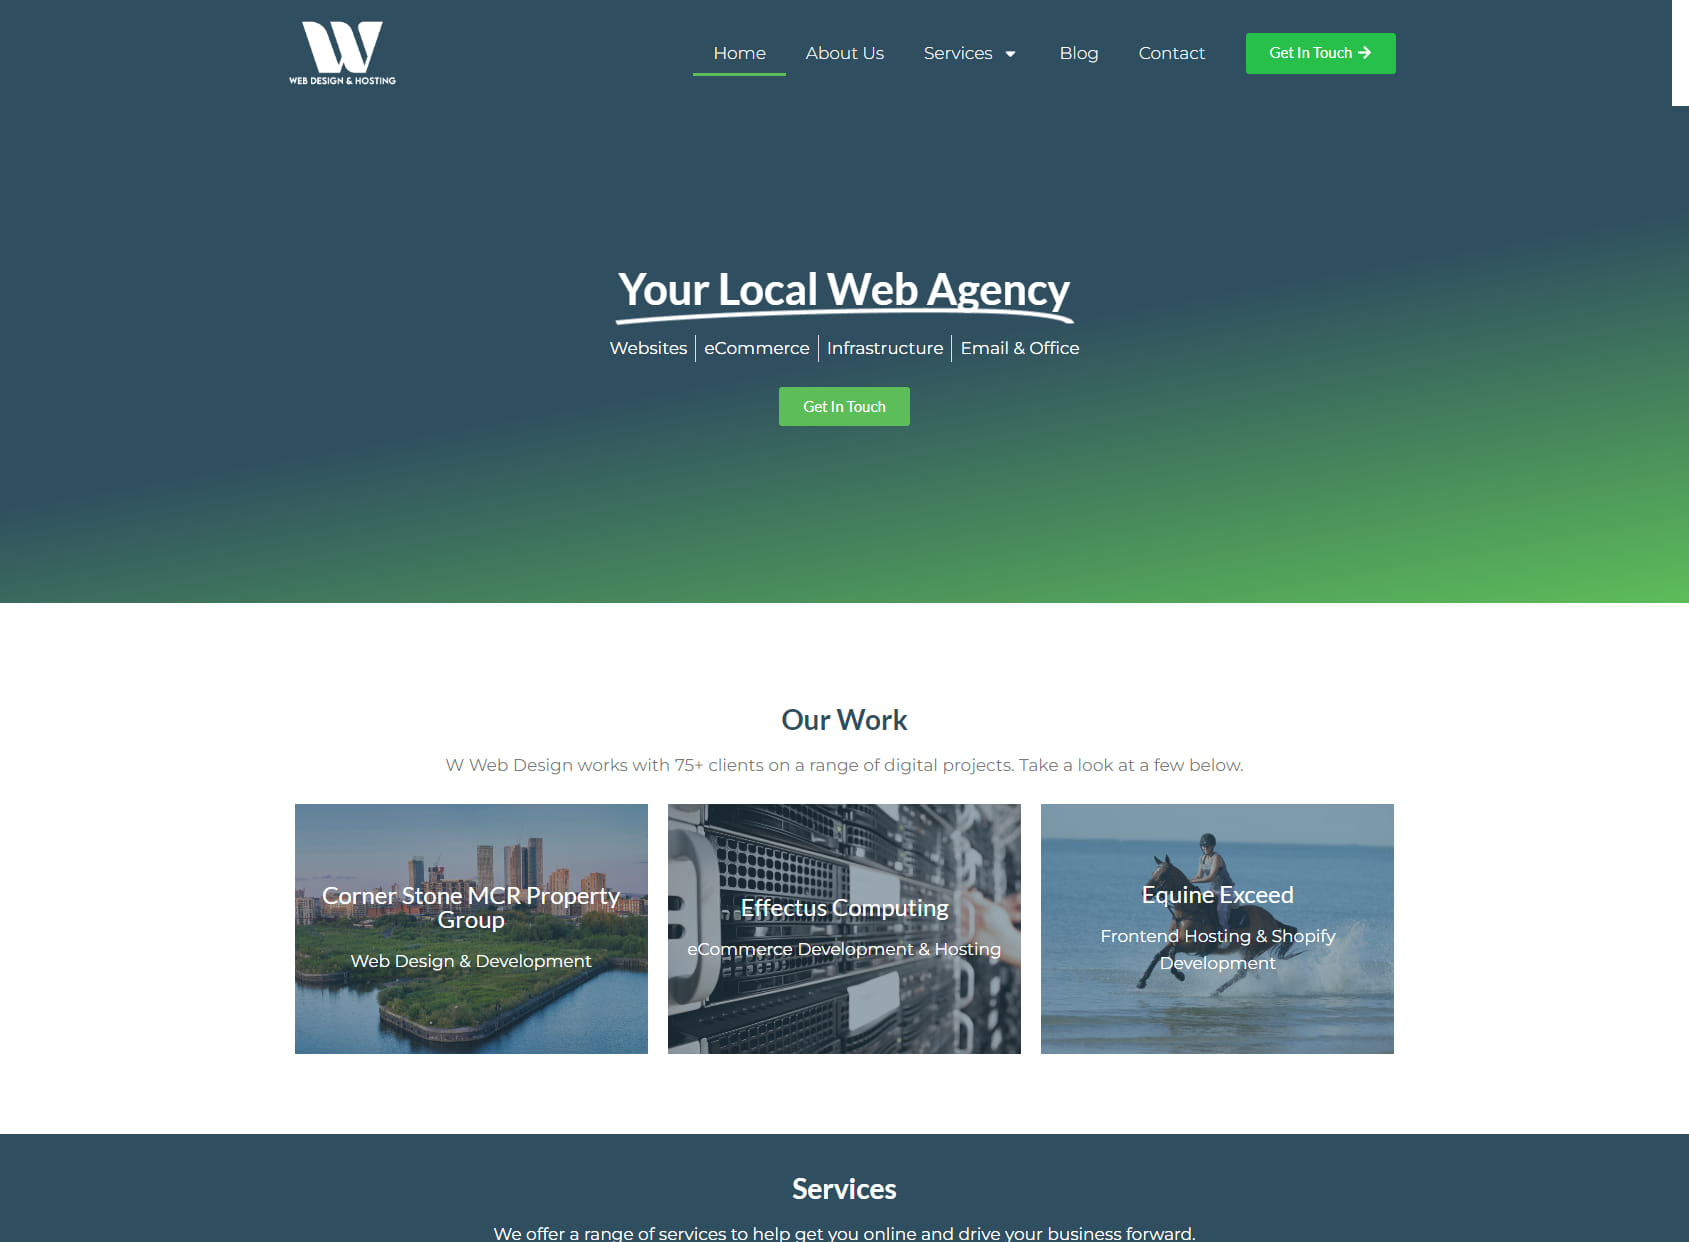 W Web Design and Hosting